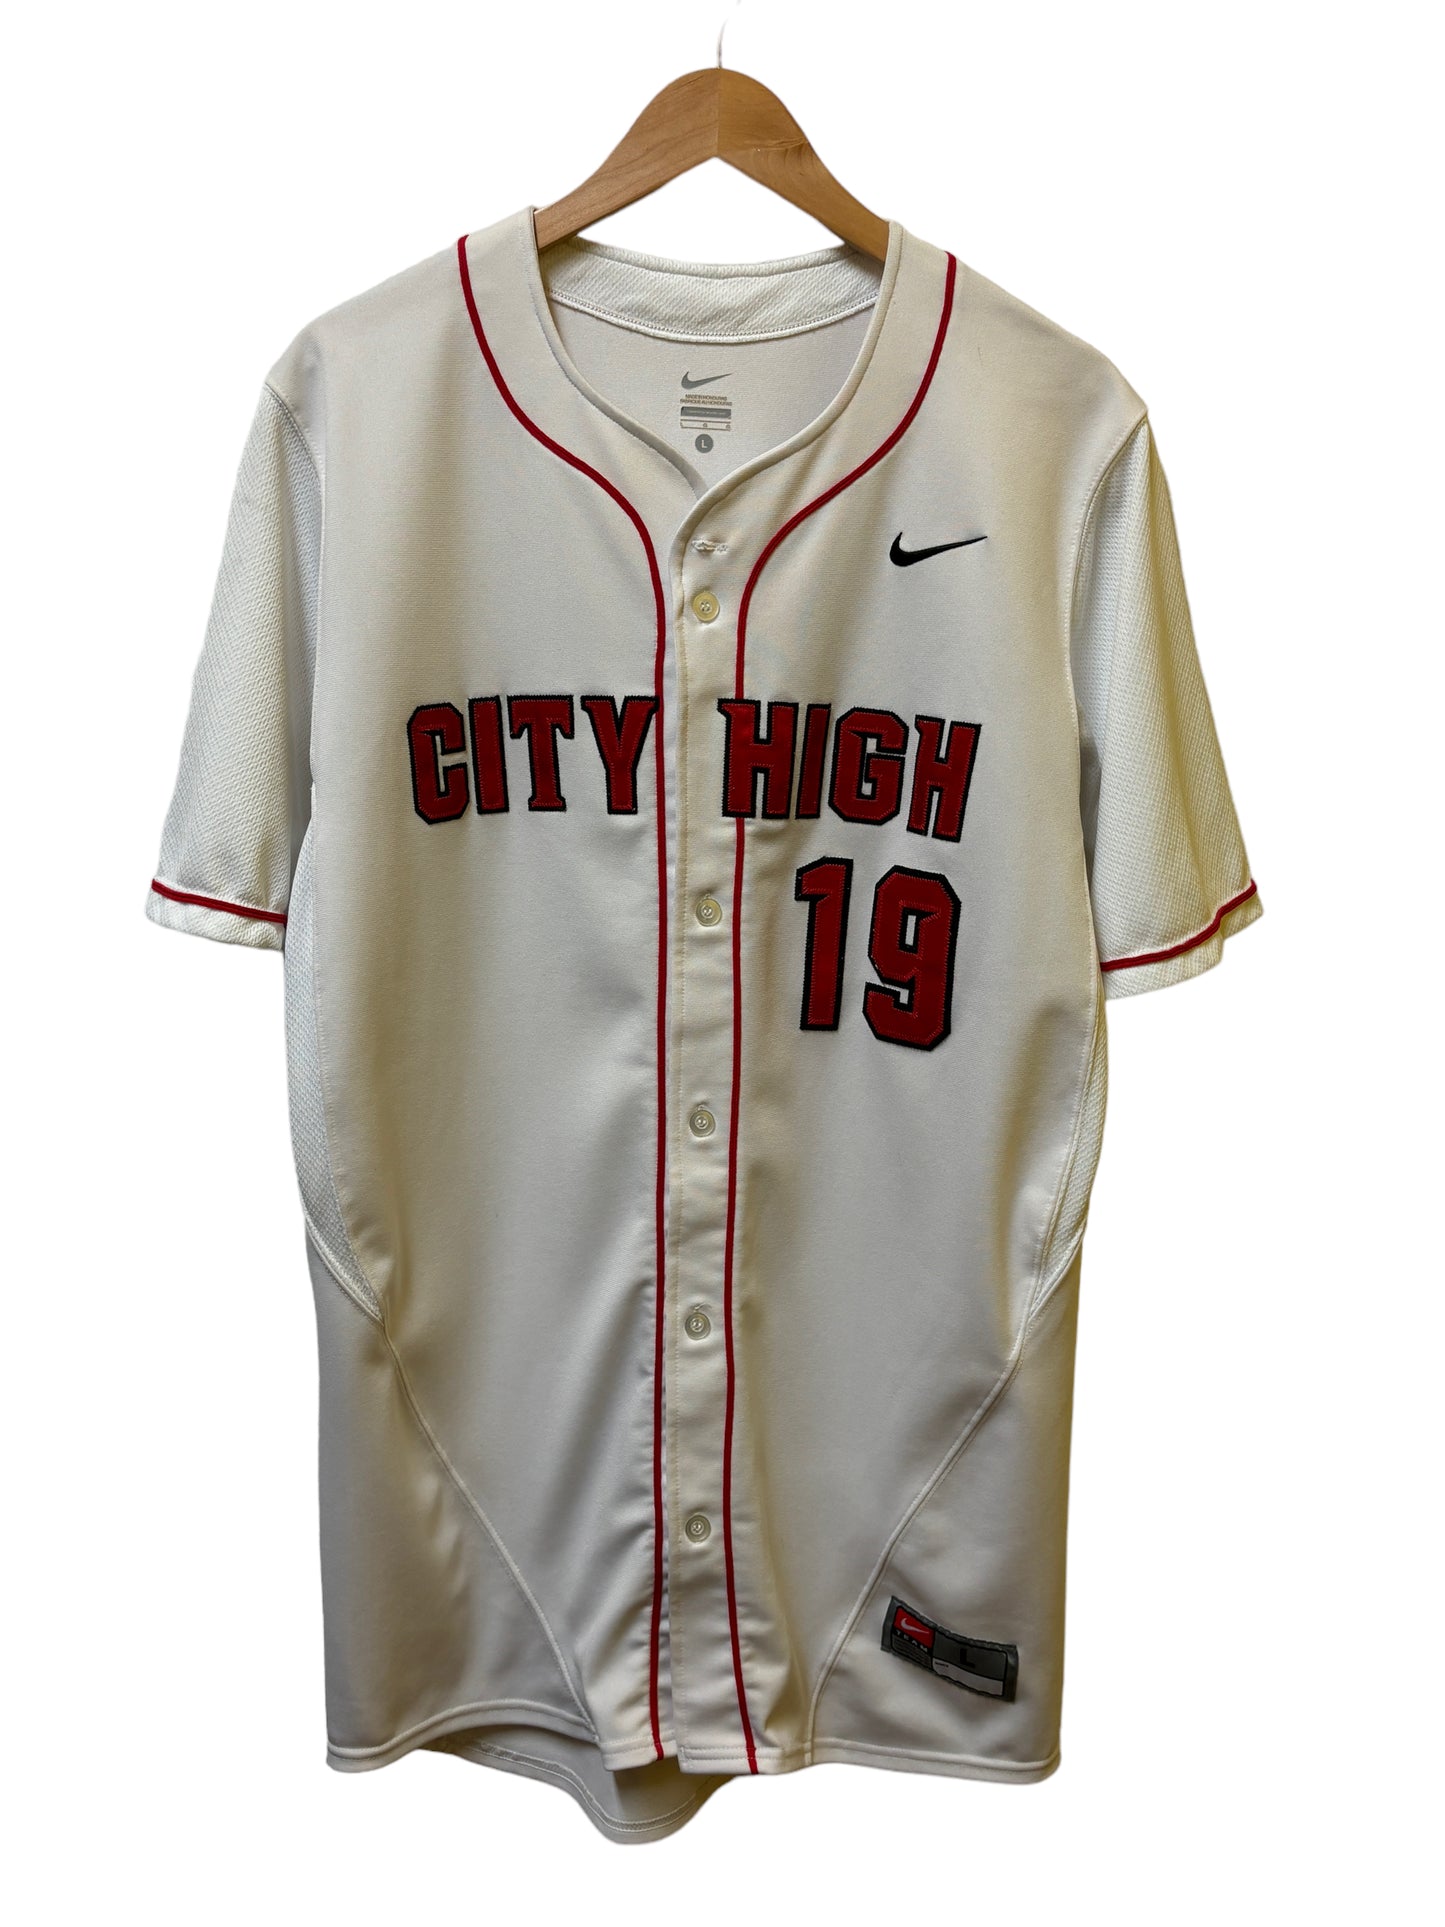 Nike City High Embroidered Baseball Jersey #19 Size Large